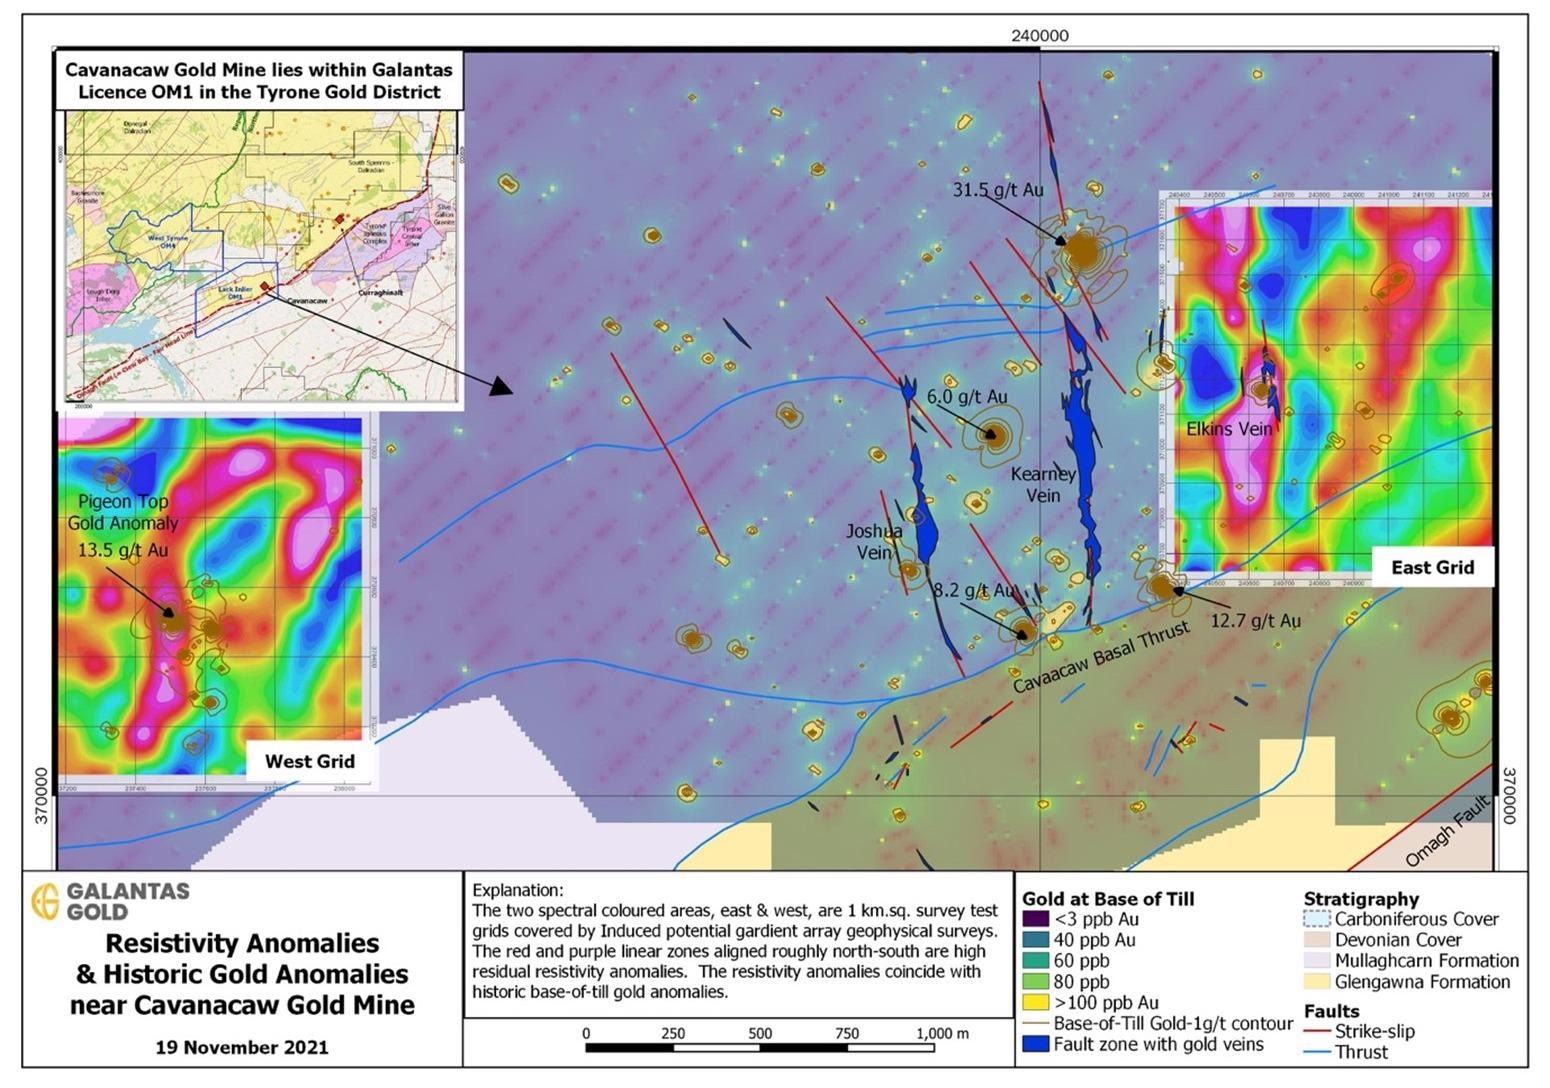 Galantas Gold Announces New Geophysical Surveys Next to Cavanacaw Gold Mine.